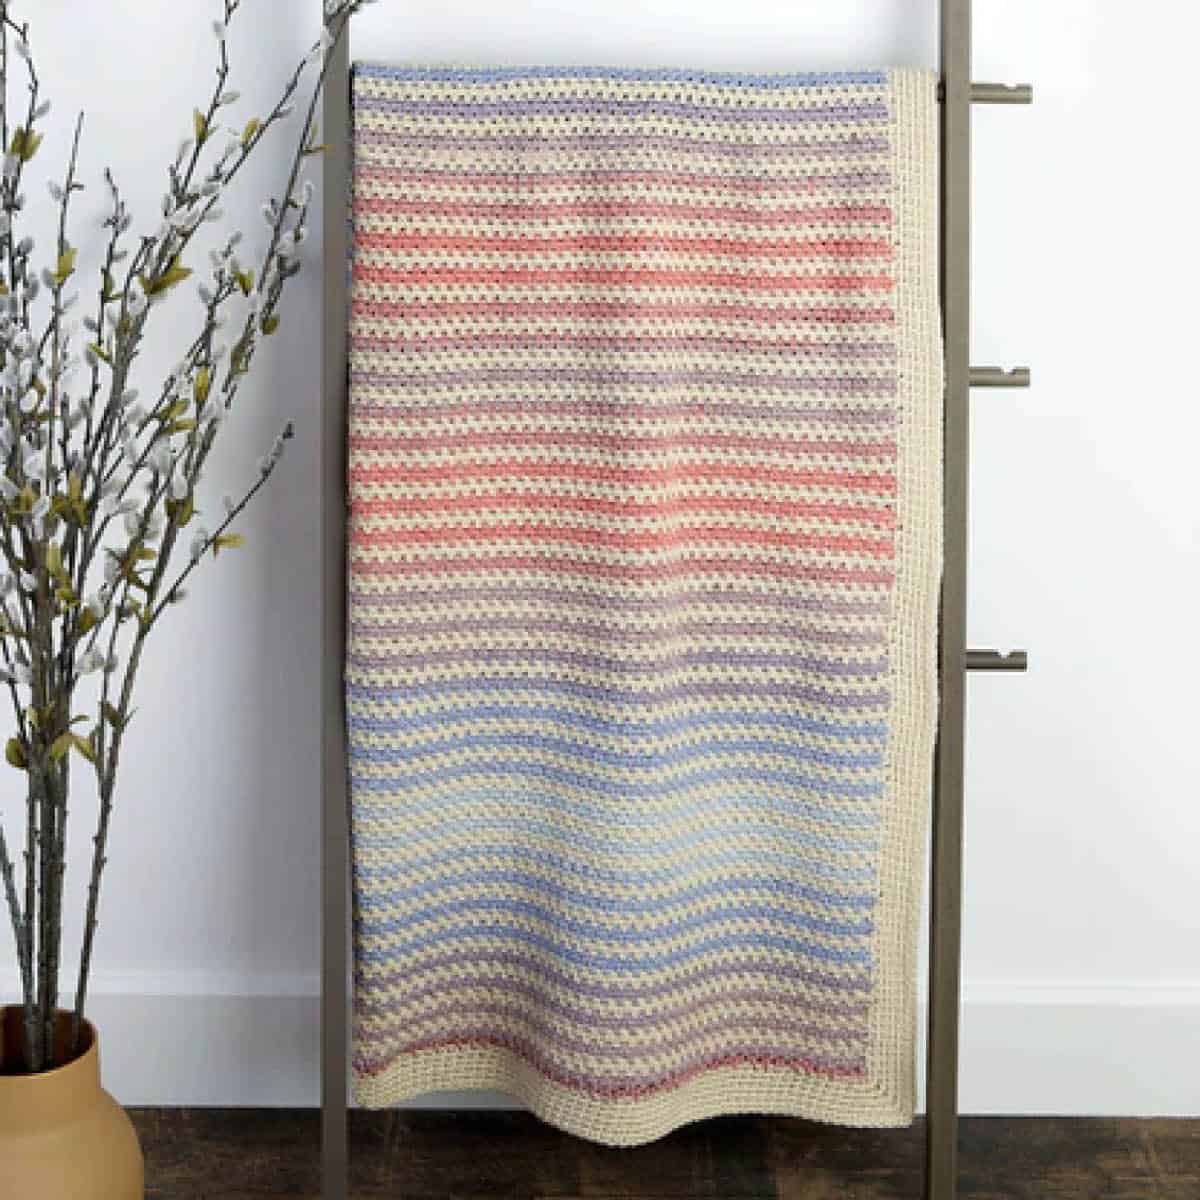 Ombre Moss Stitch Crochet Blanket